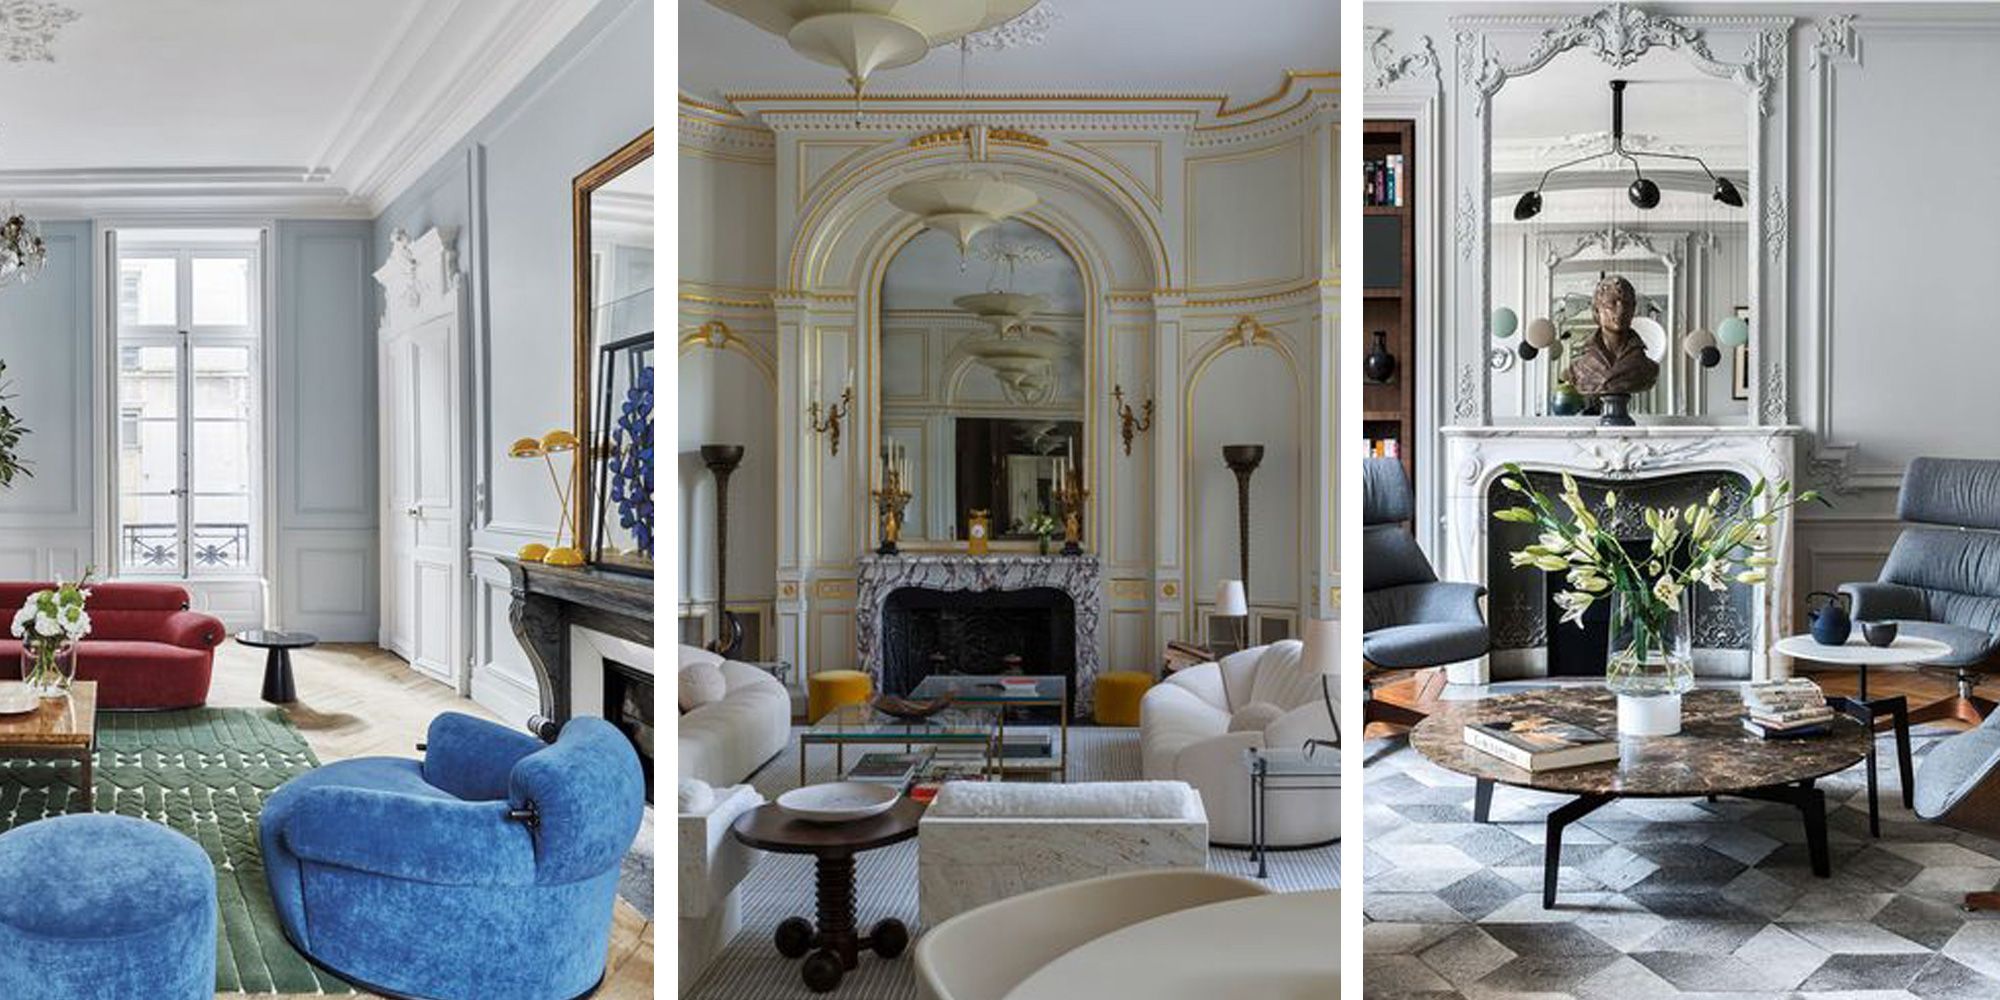 Comprar muebles en Madrid salones modernos